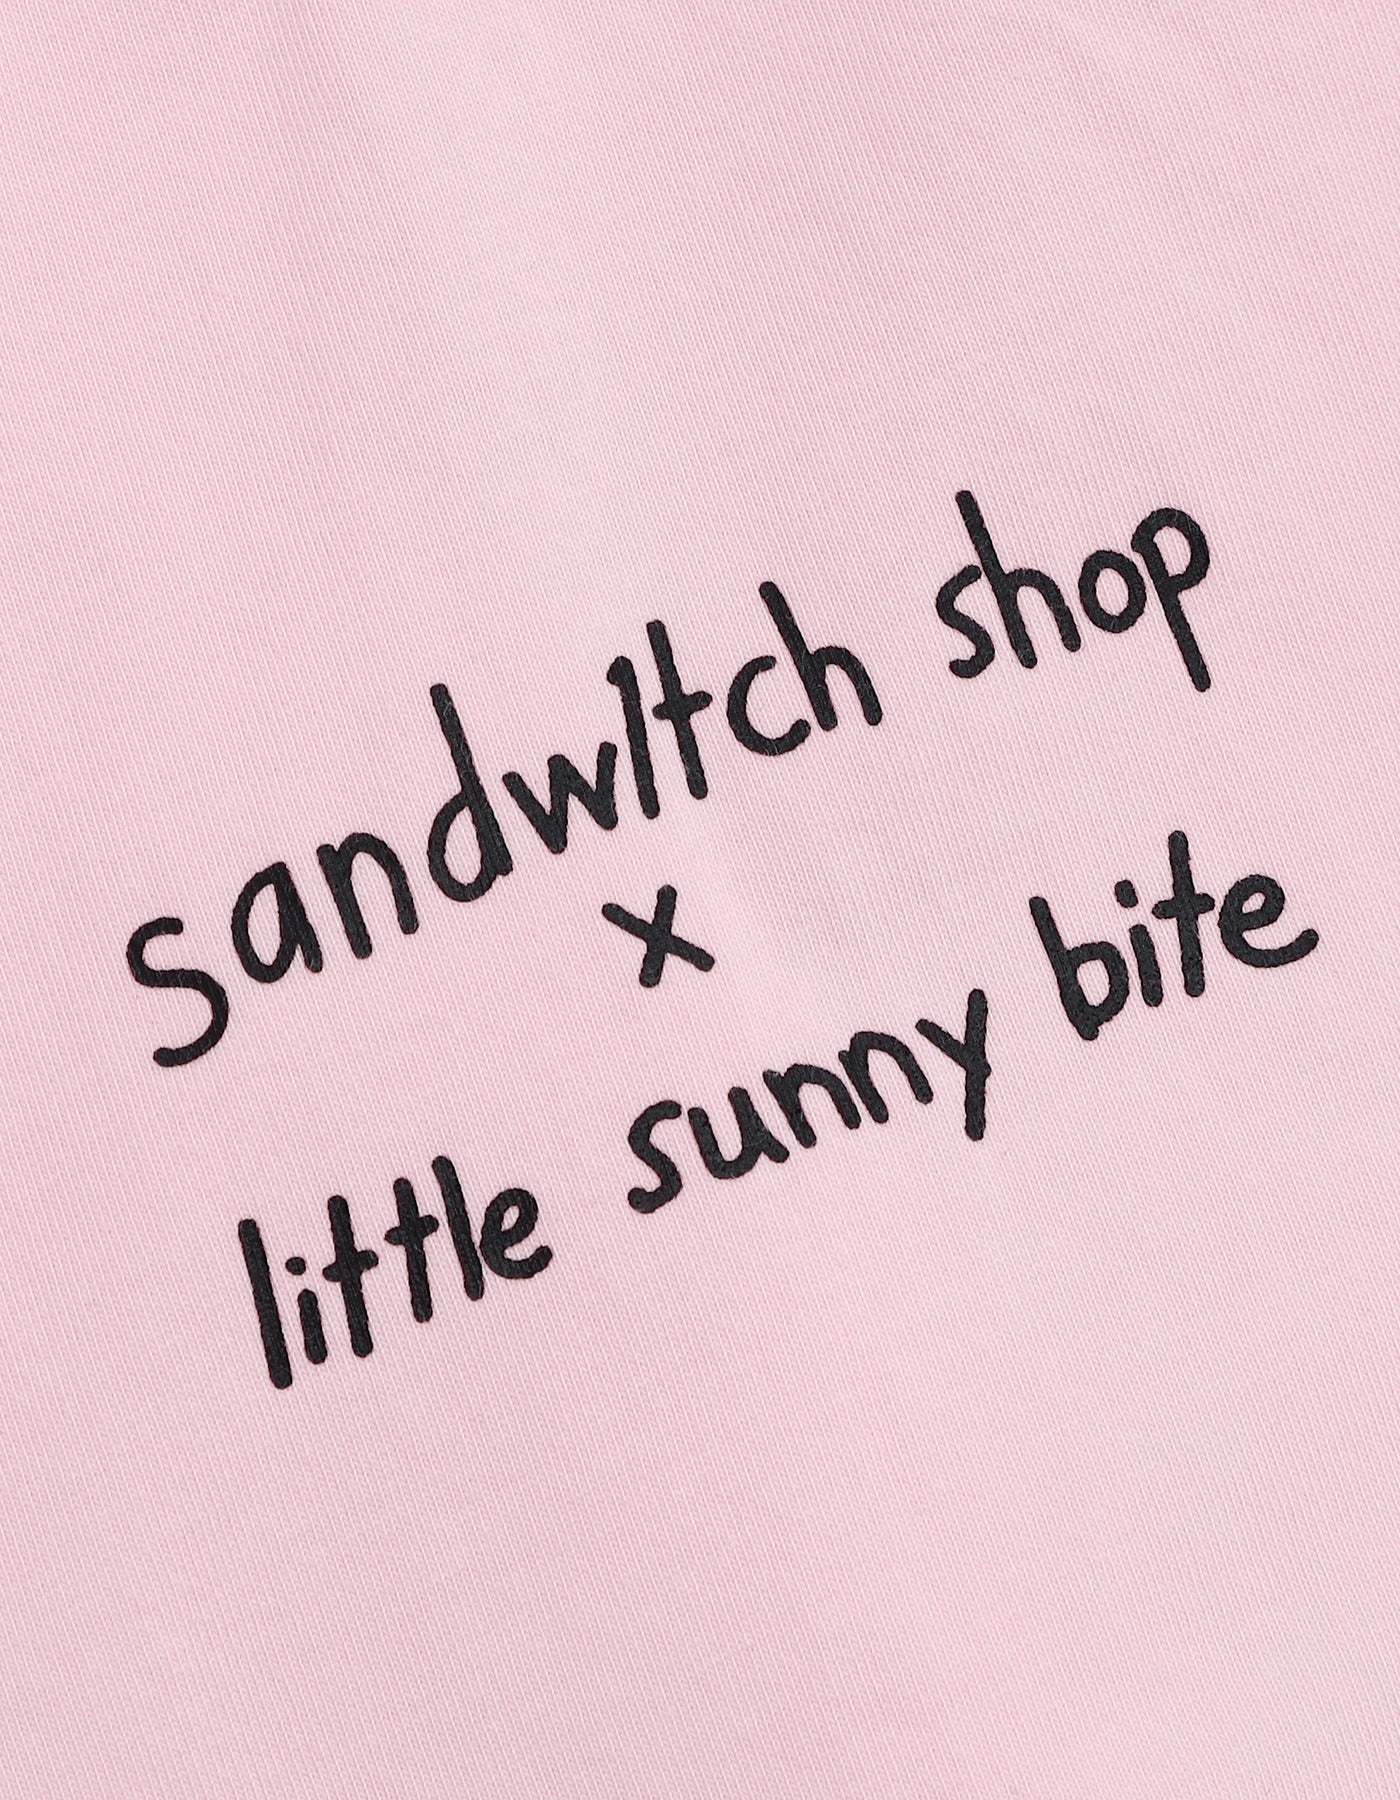 sandw1tch shop x little sunny bite tee / PINK